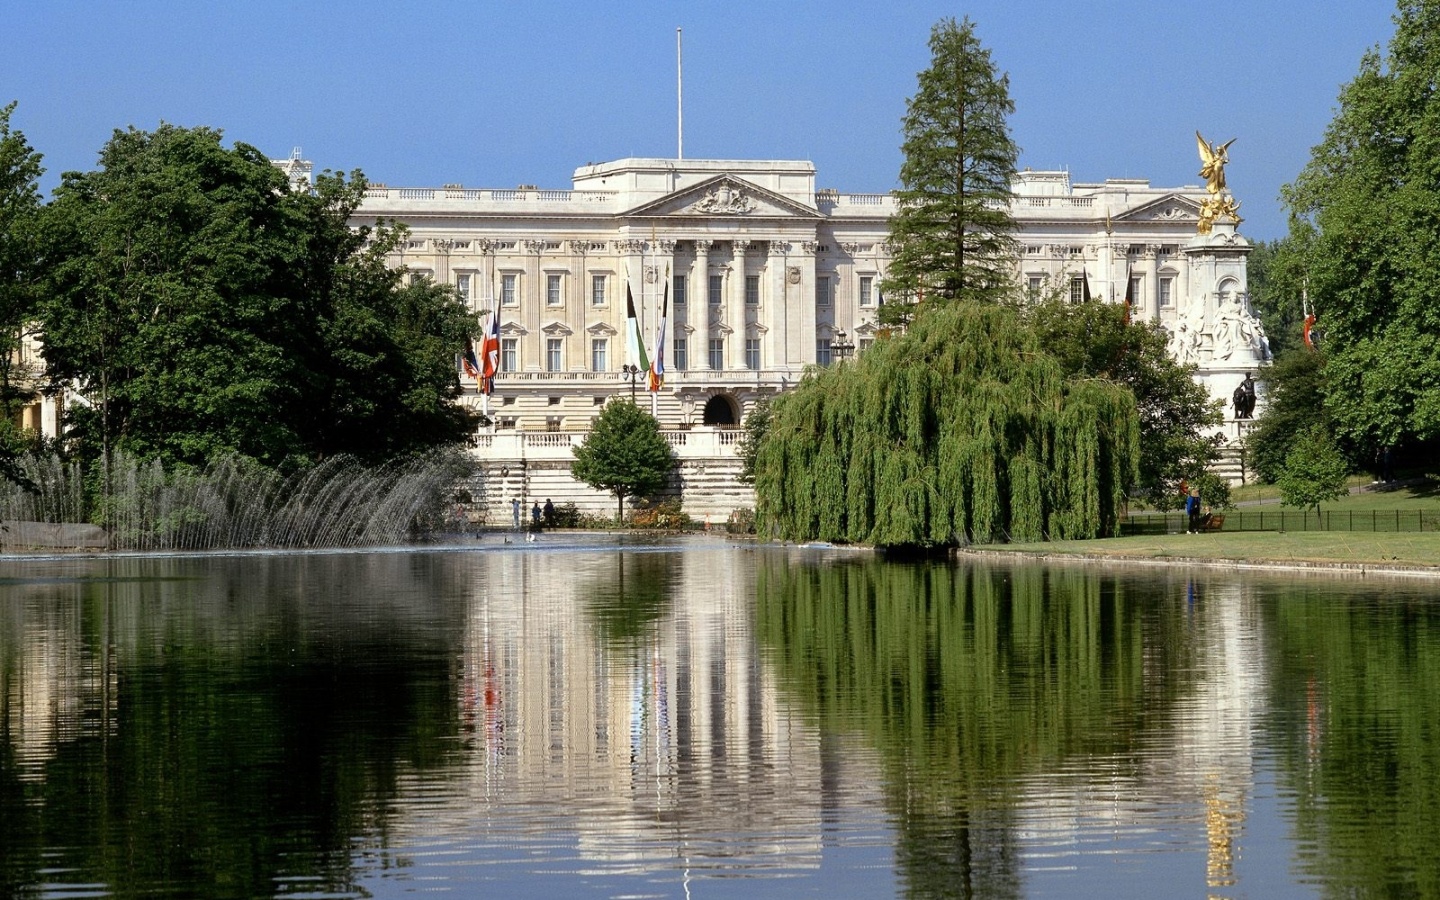 The history of Buckingham Palace 